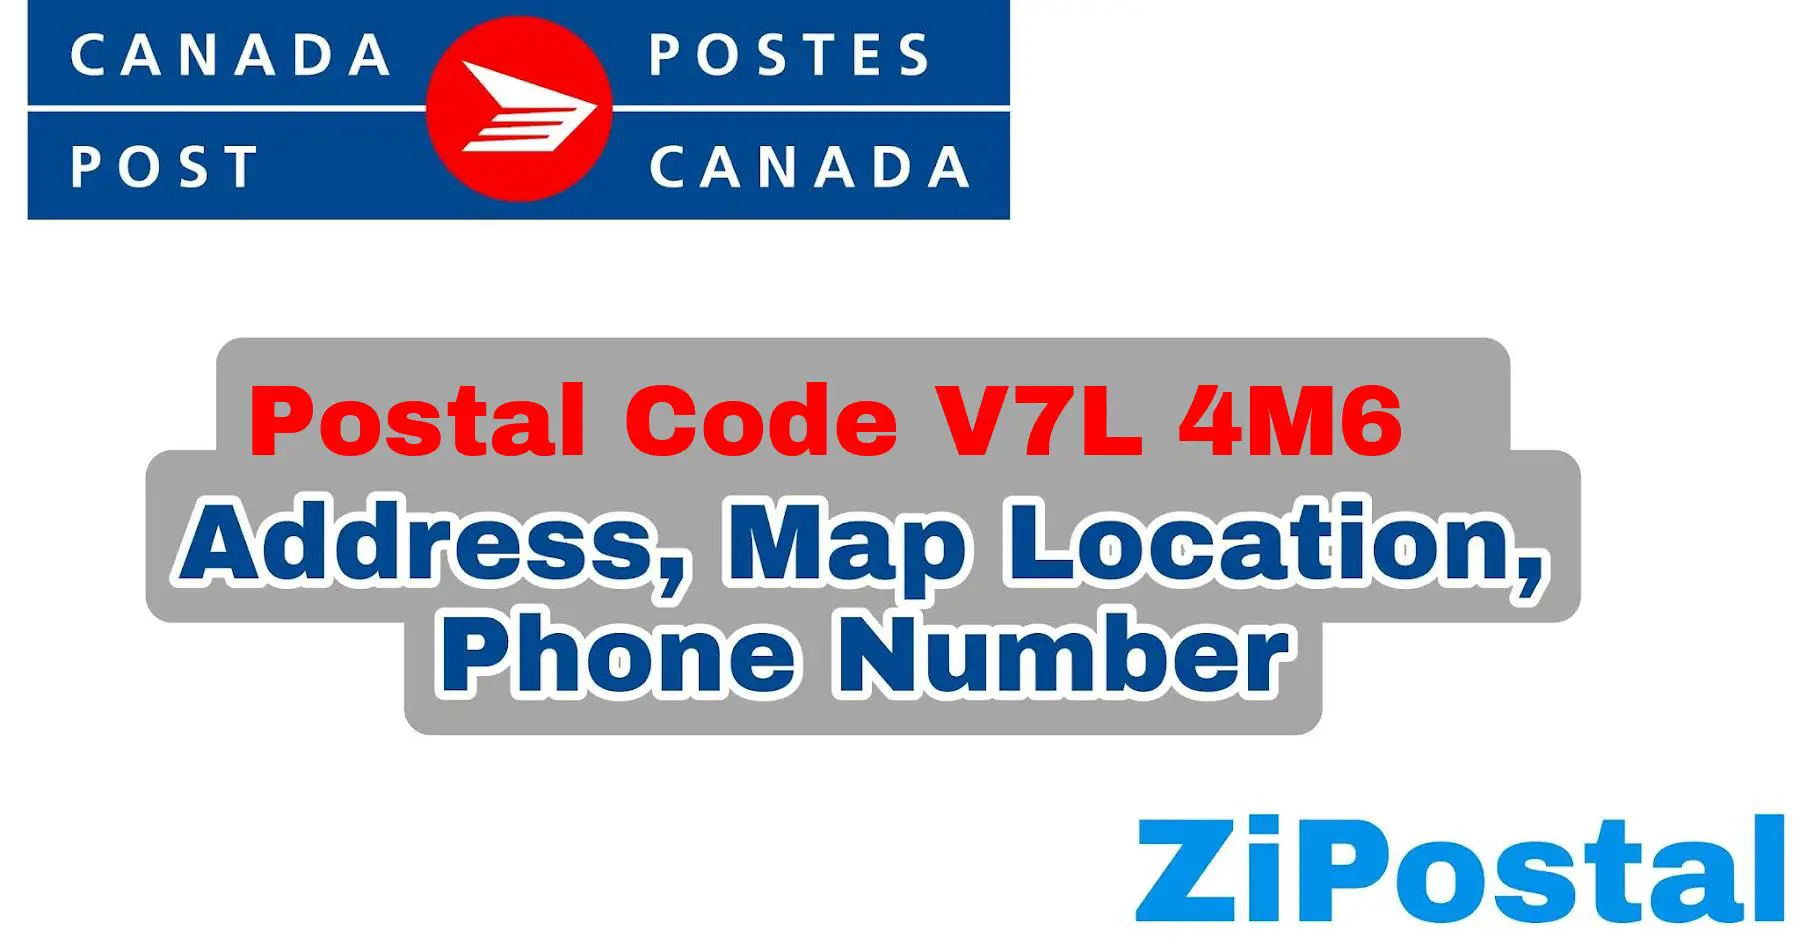 Postal Code V7L 4M6 Address Map Location and Phone Number